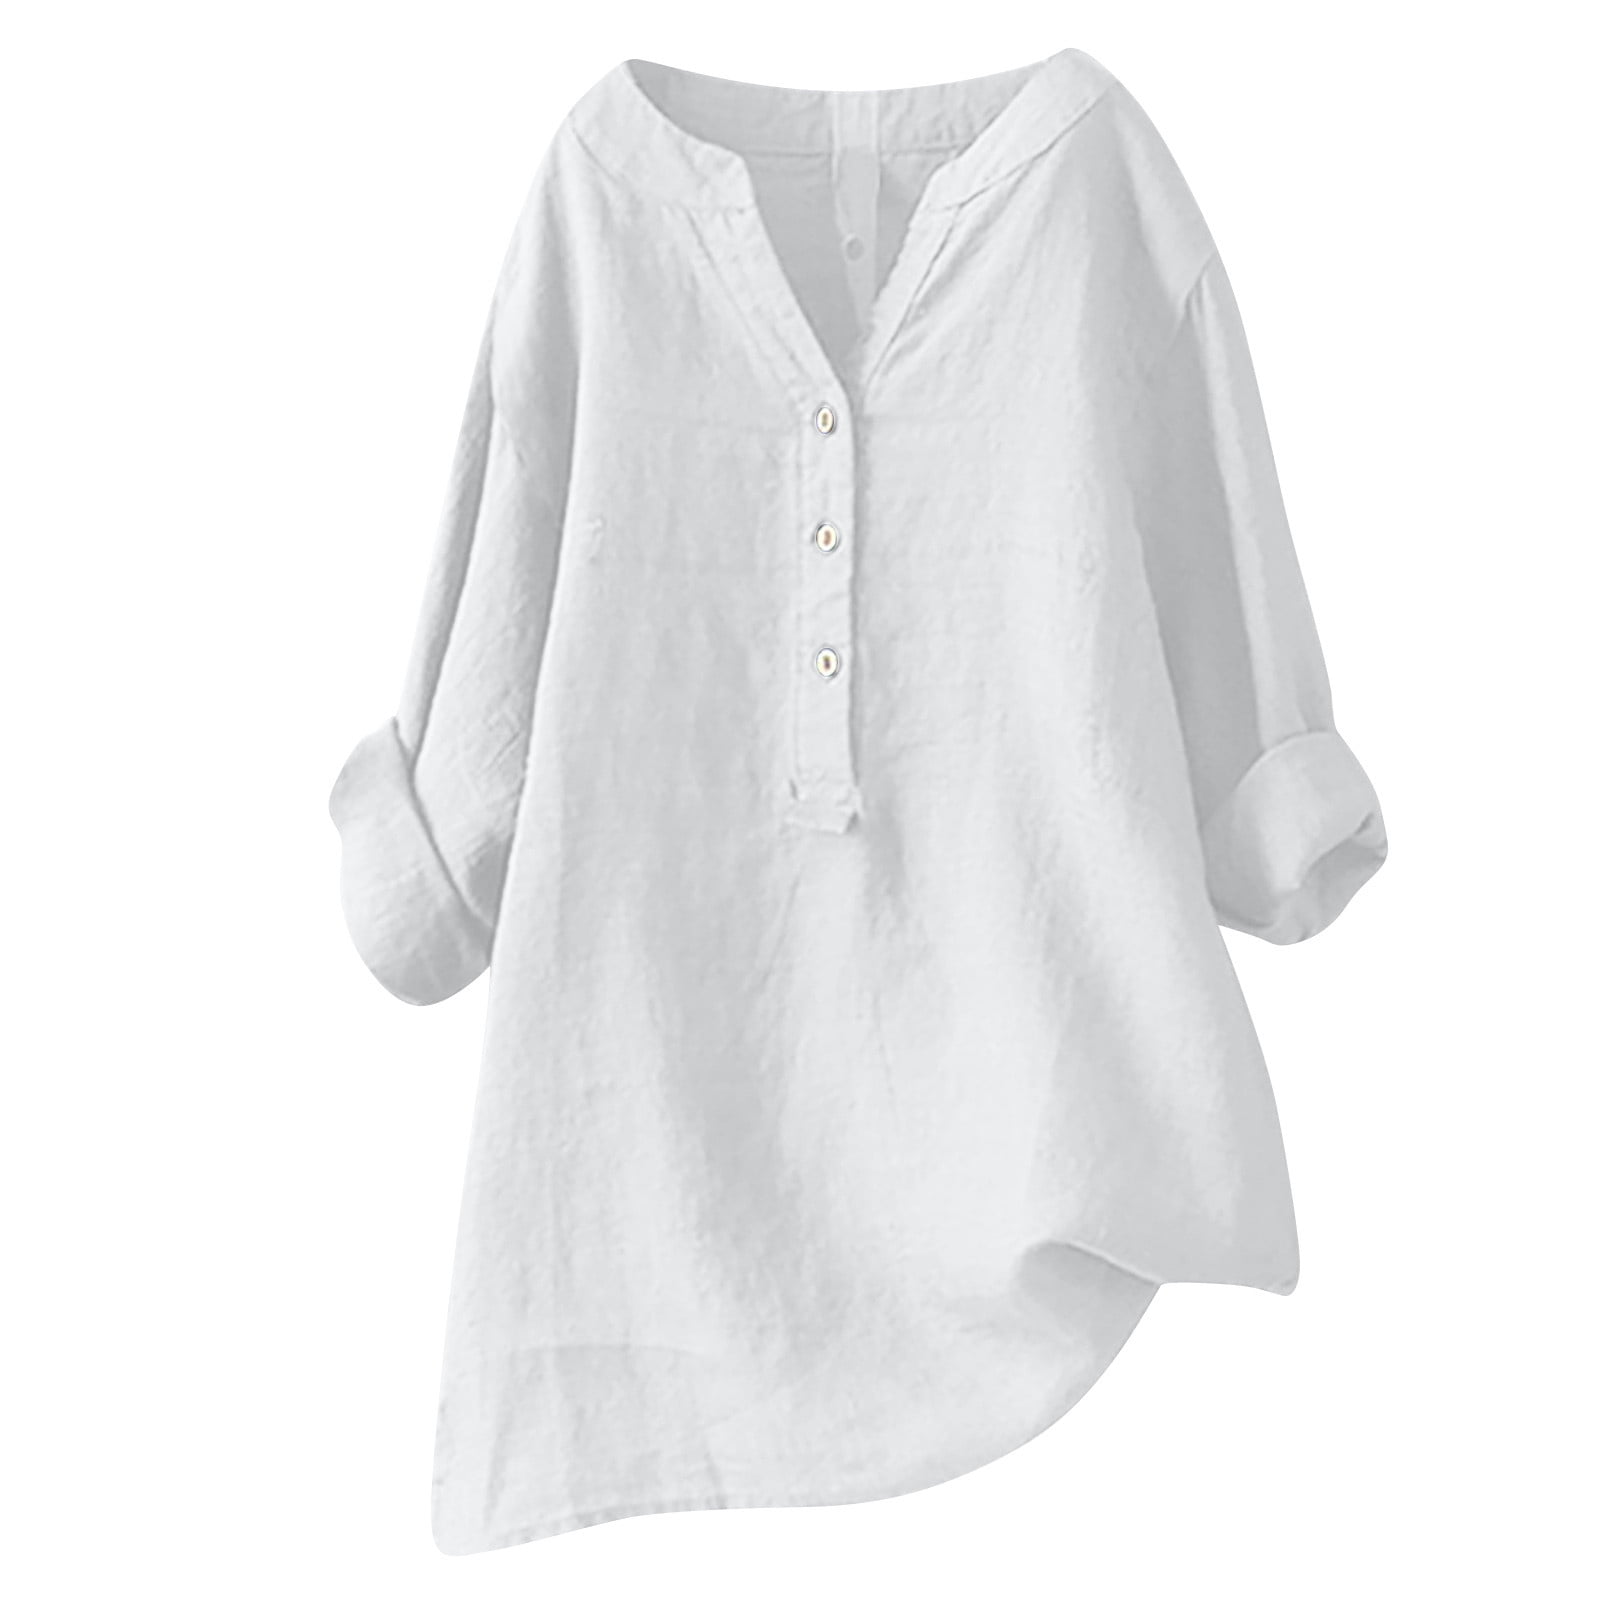 Zkozptok Womens Cotton Linen Tops Summer V-neck Plus Size Casual T ...